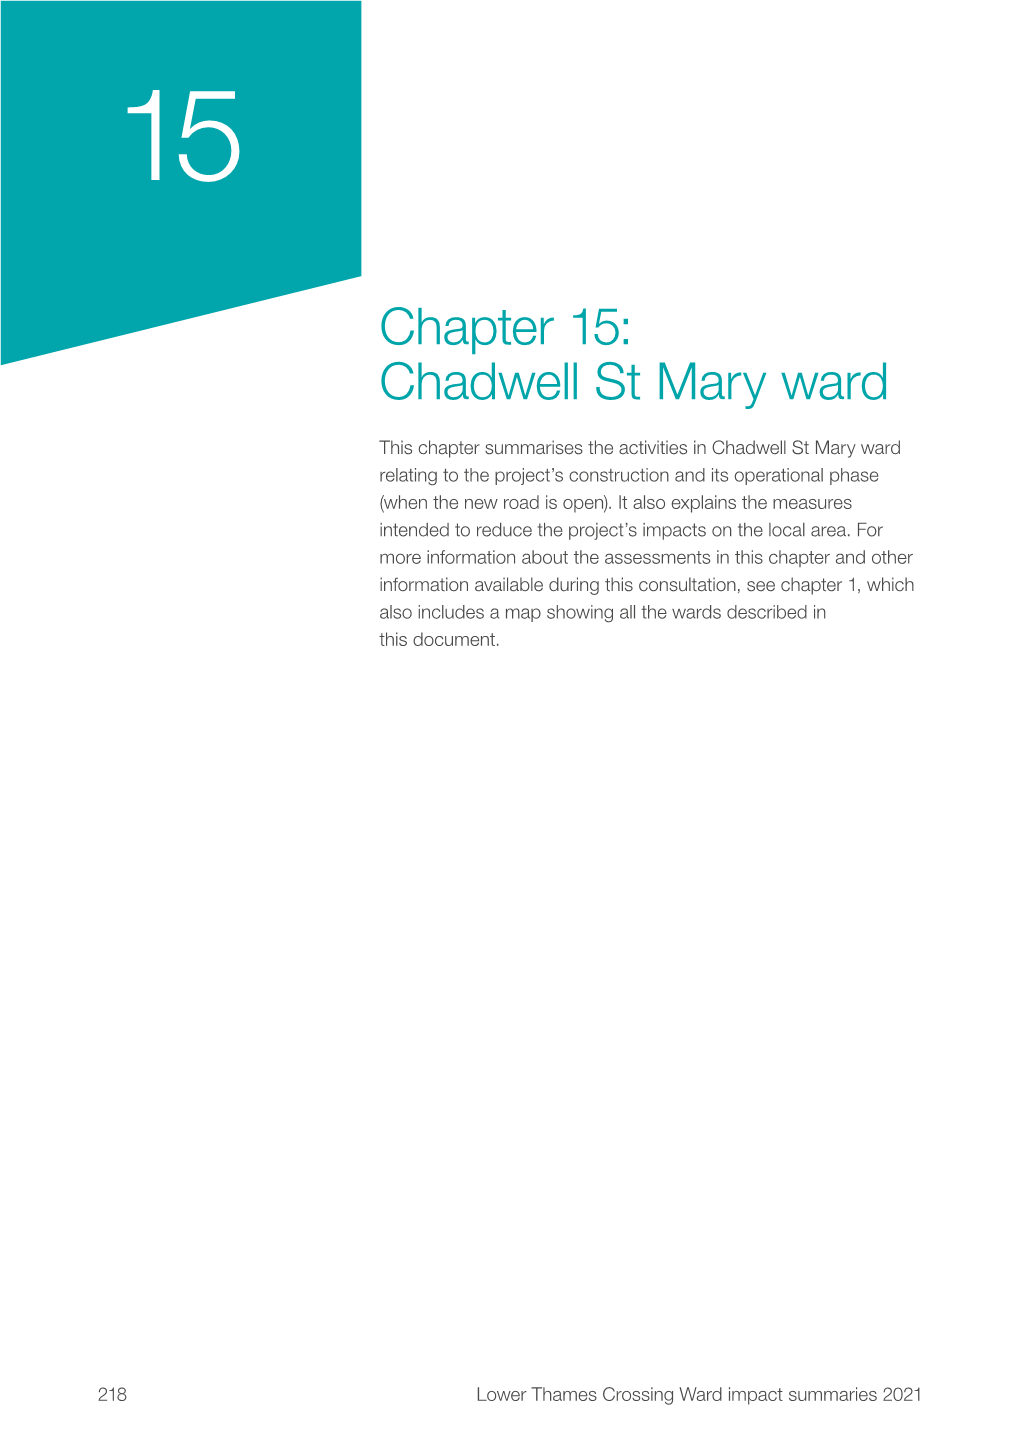 Chadwell St Mary Ward